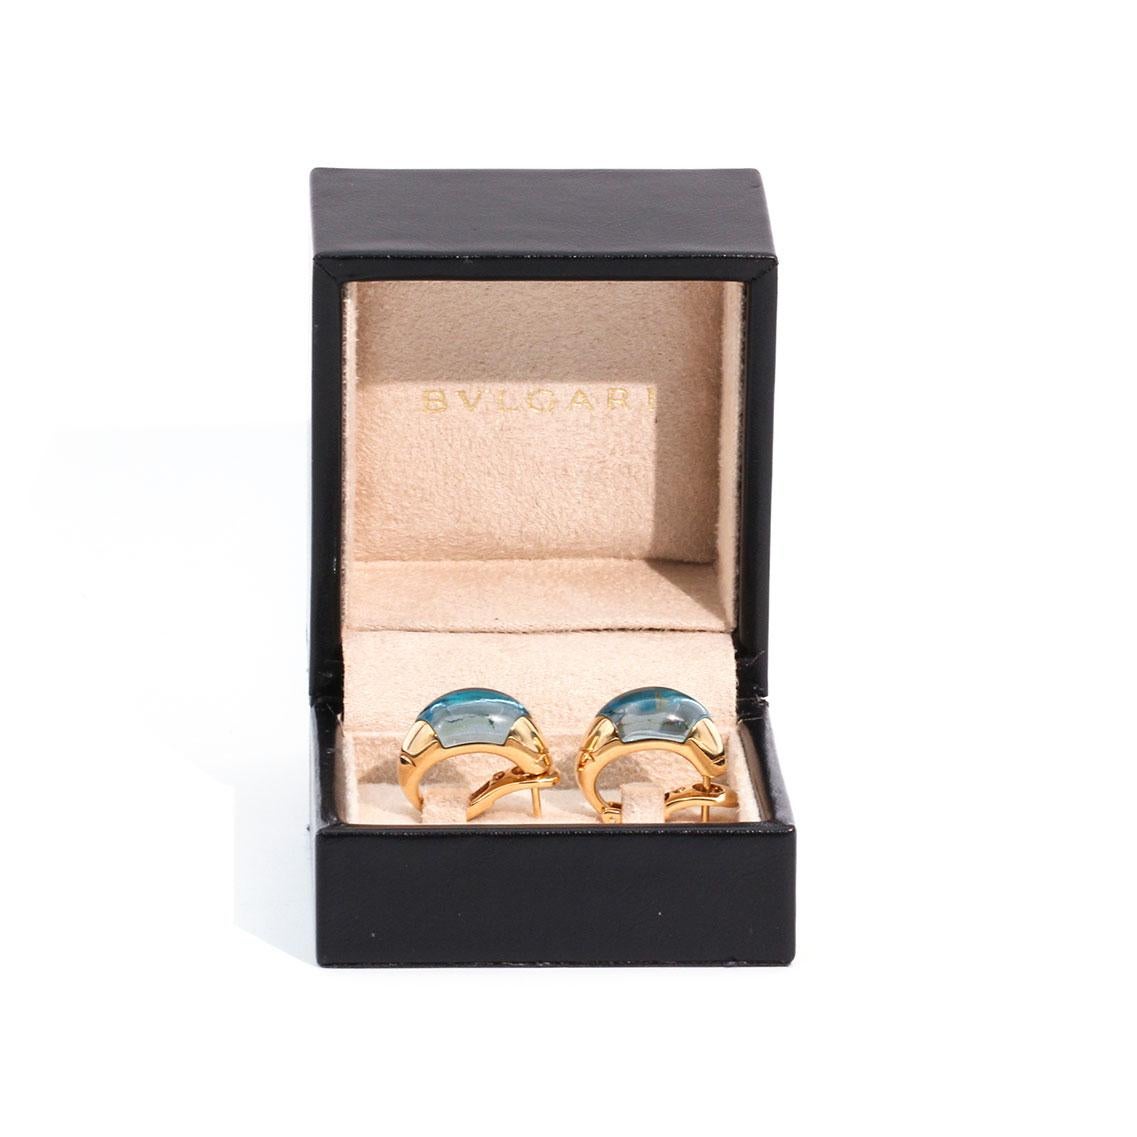 Contemporary Bulgari Tronchetto Topaz Earrings in 18 Carat Yellow Gold with Original Box